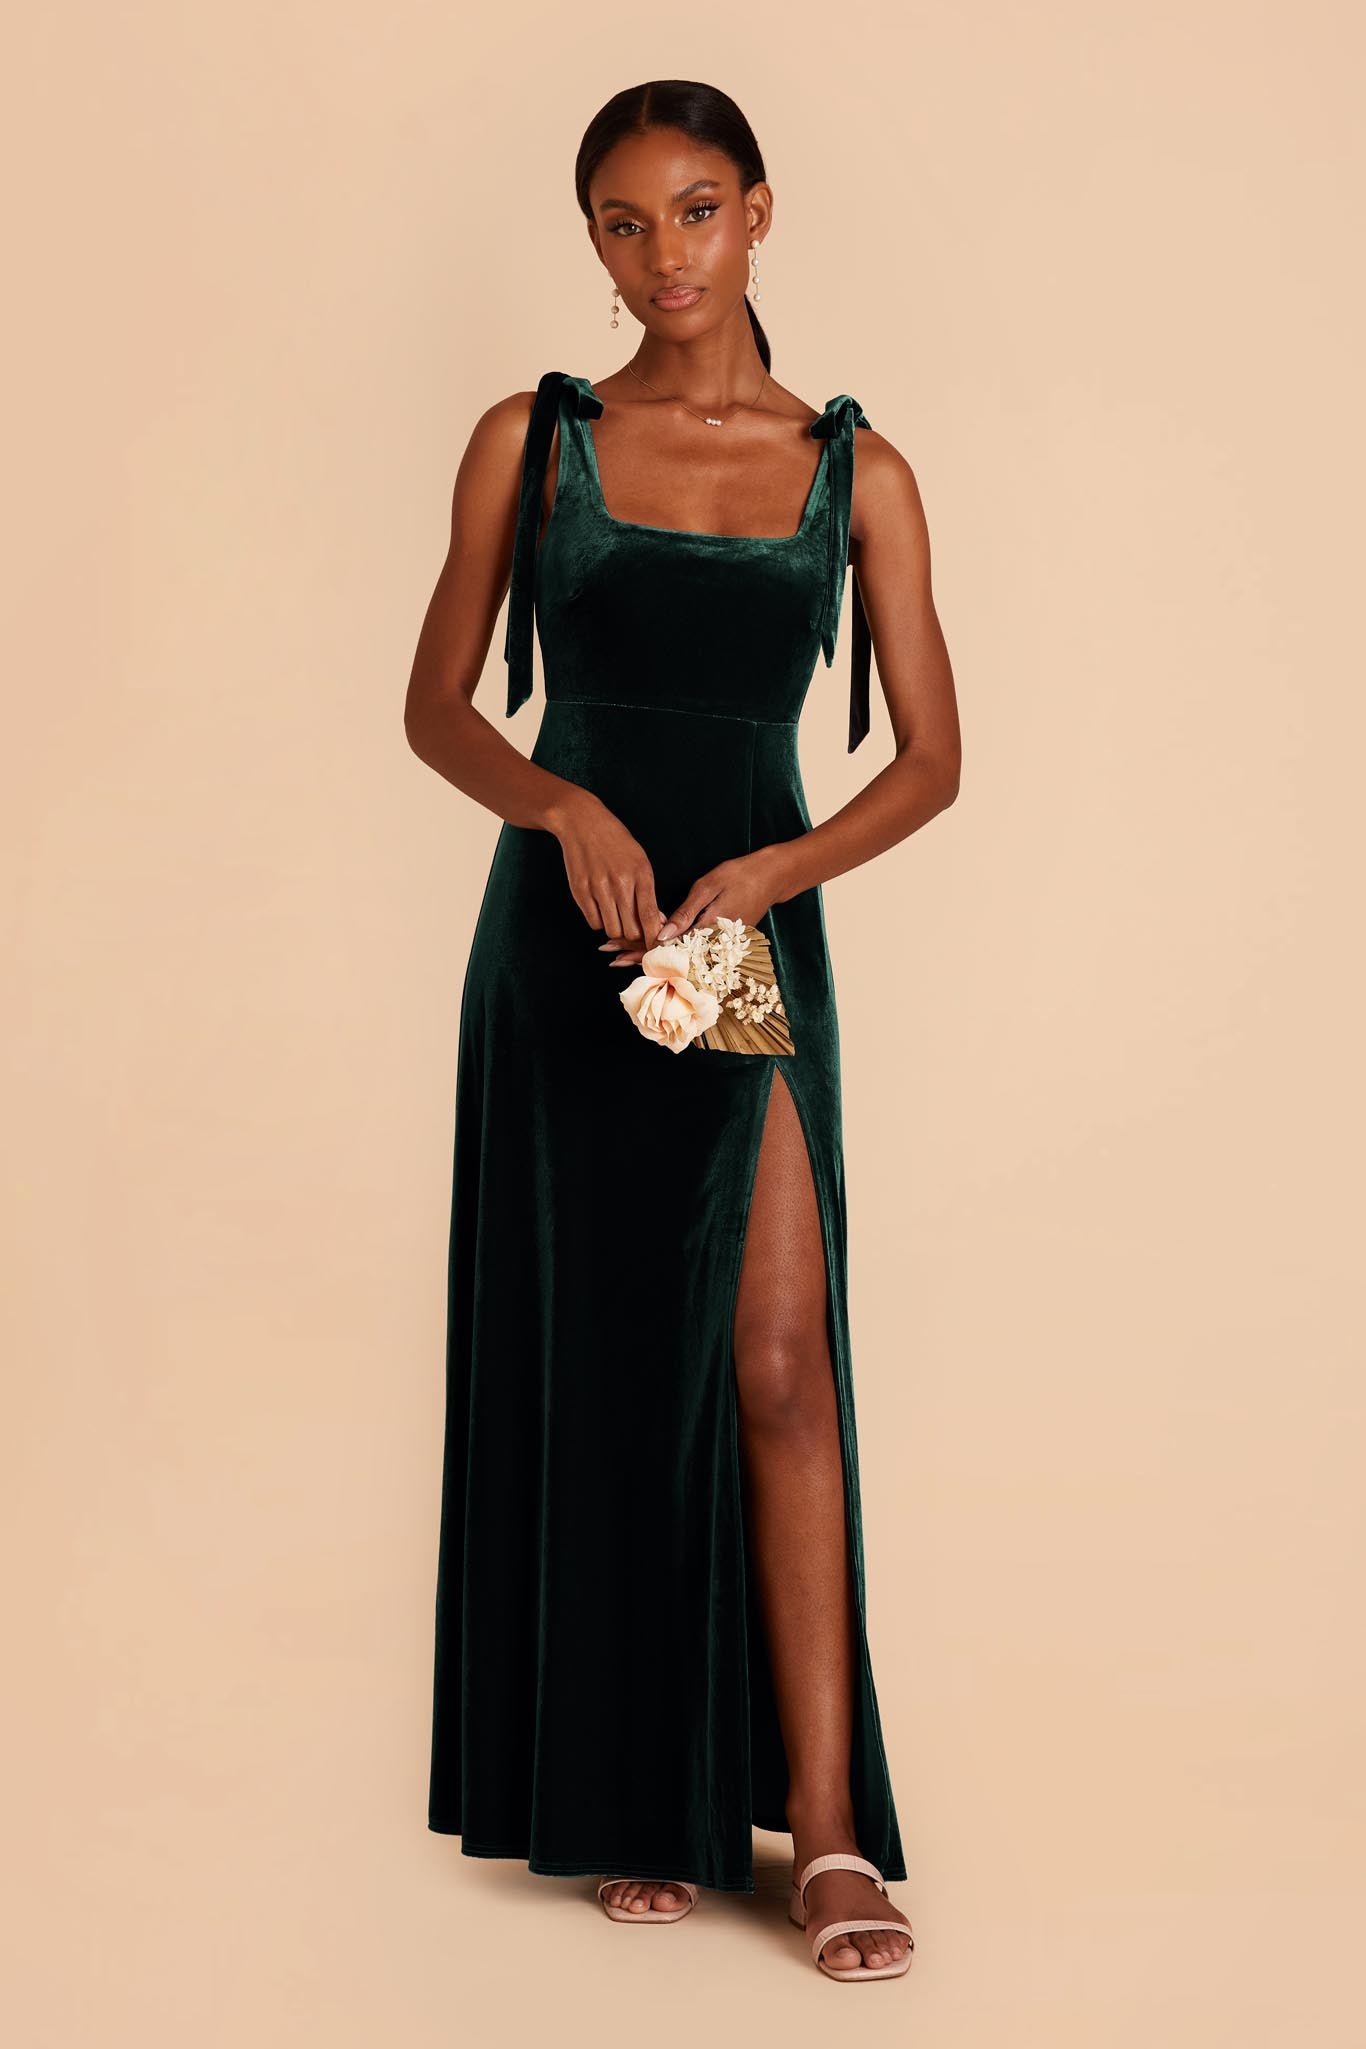 Alex Emerald A-Line Velvet Bridesmaid Dress